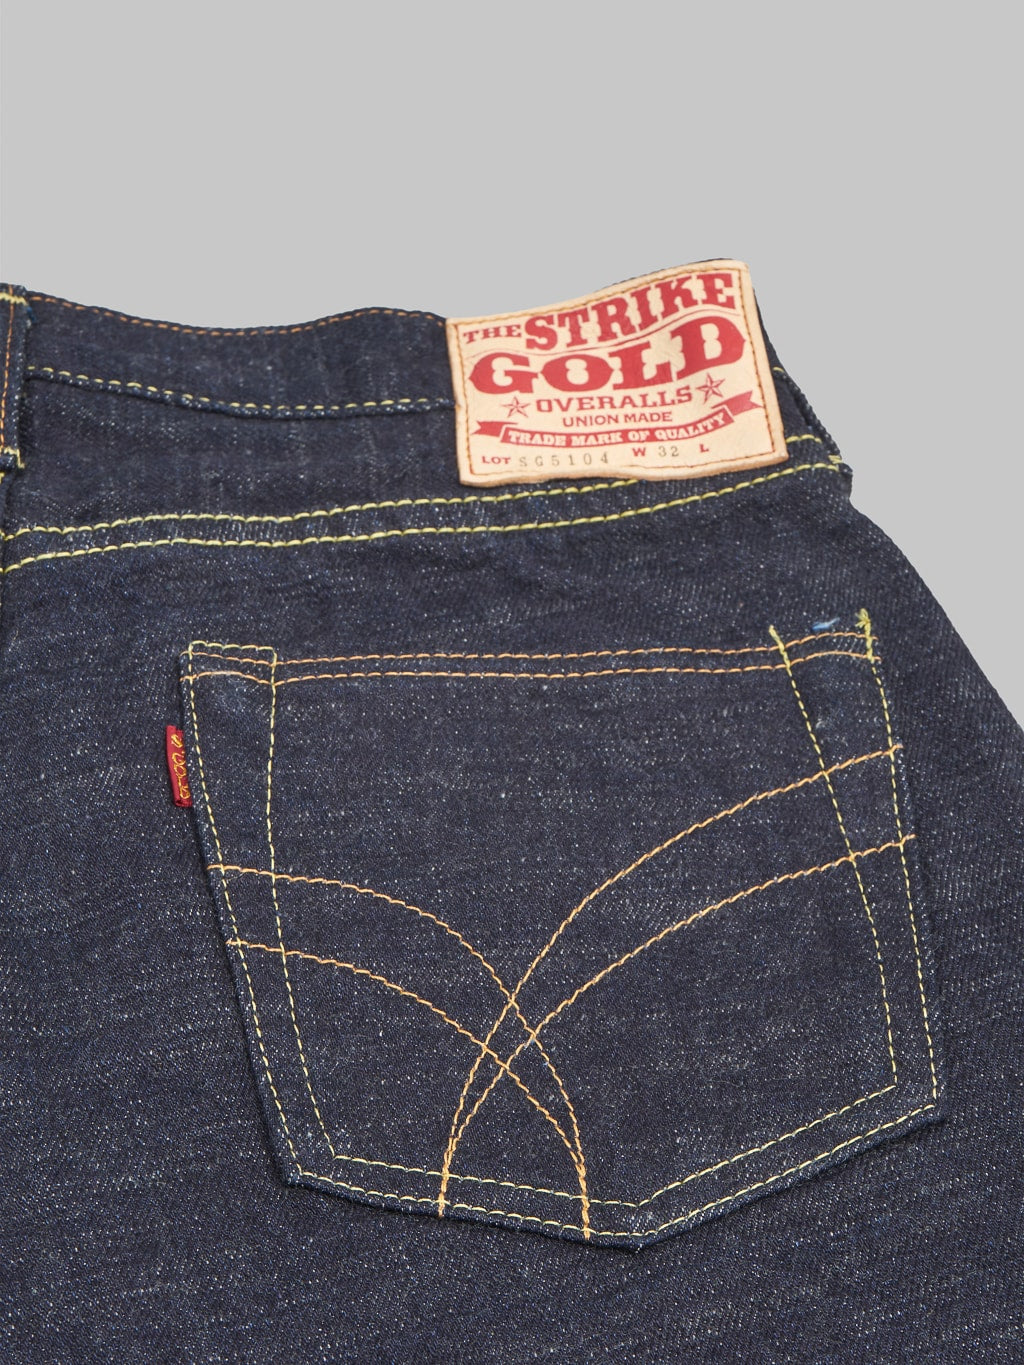 The Strike Gold 5104 Slub Grey Weft Straight Tapered Jeans pocket details